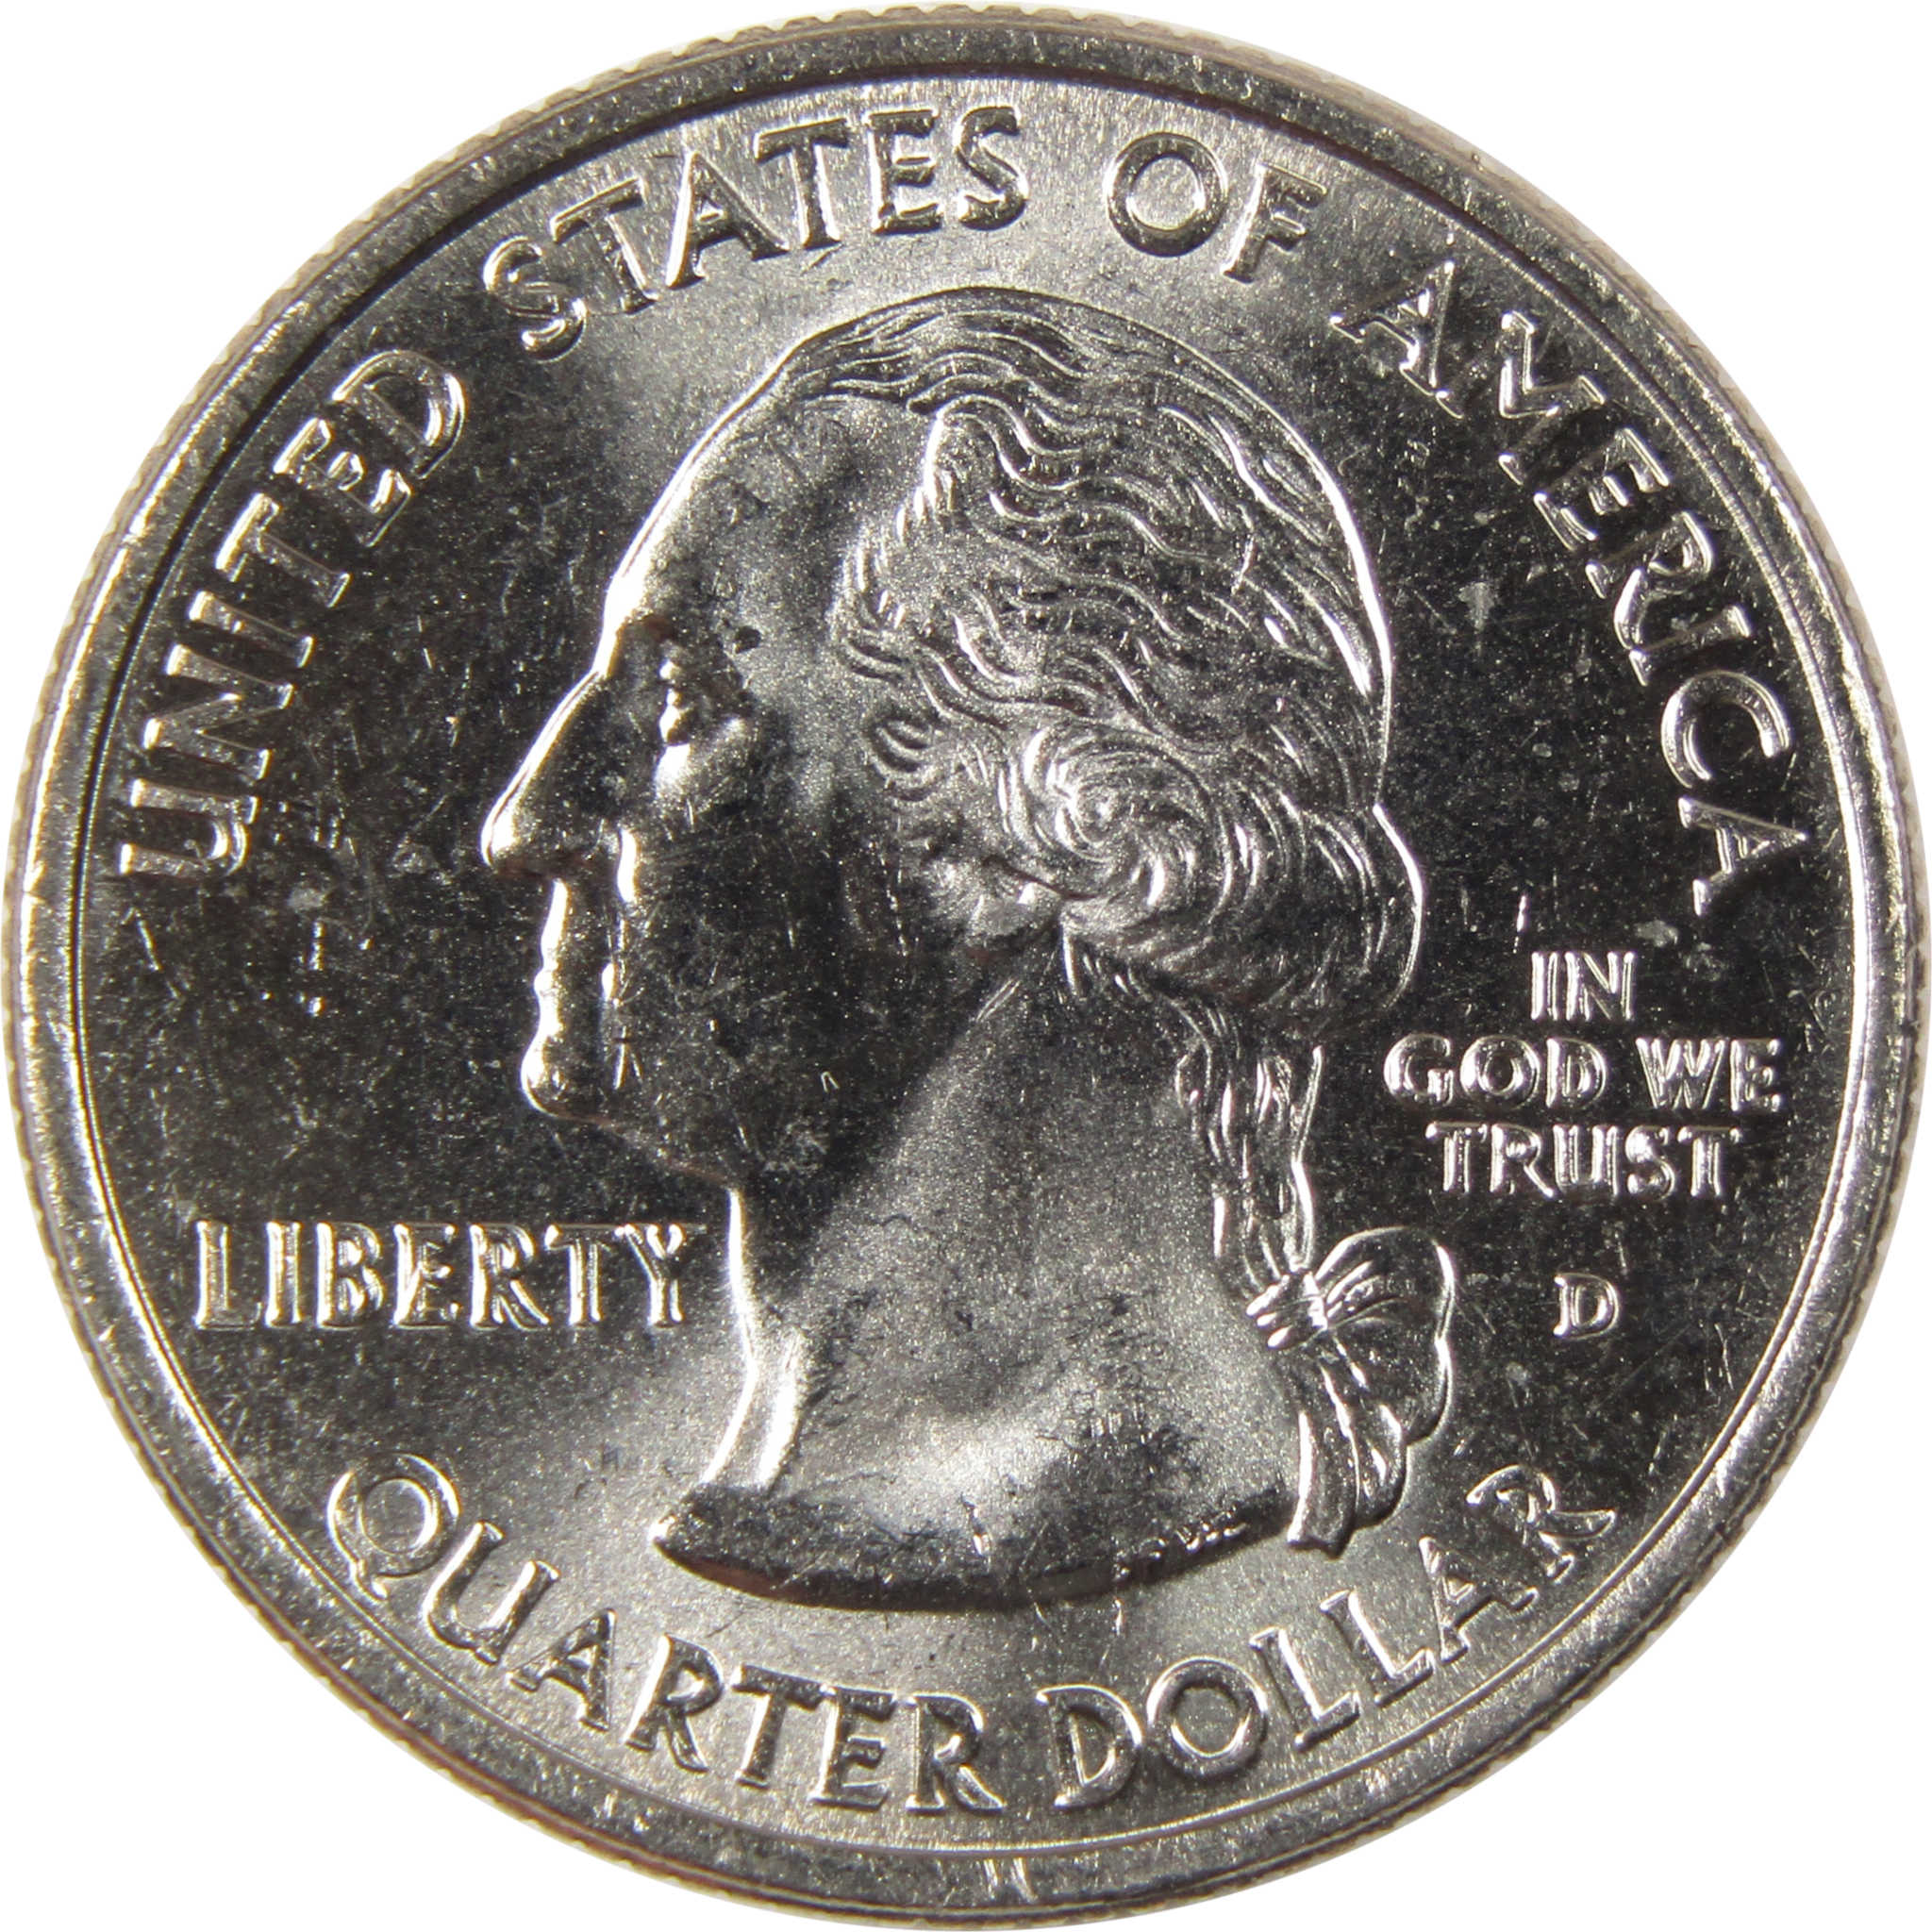 2002 D Indiana State Quarter BU Uncirculated Clad 25c Coin